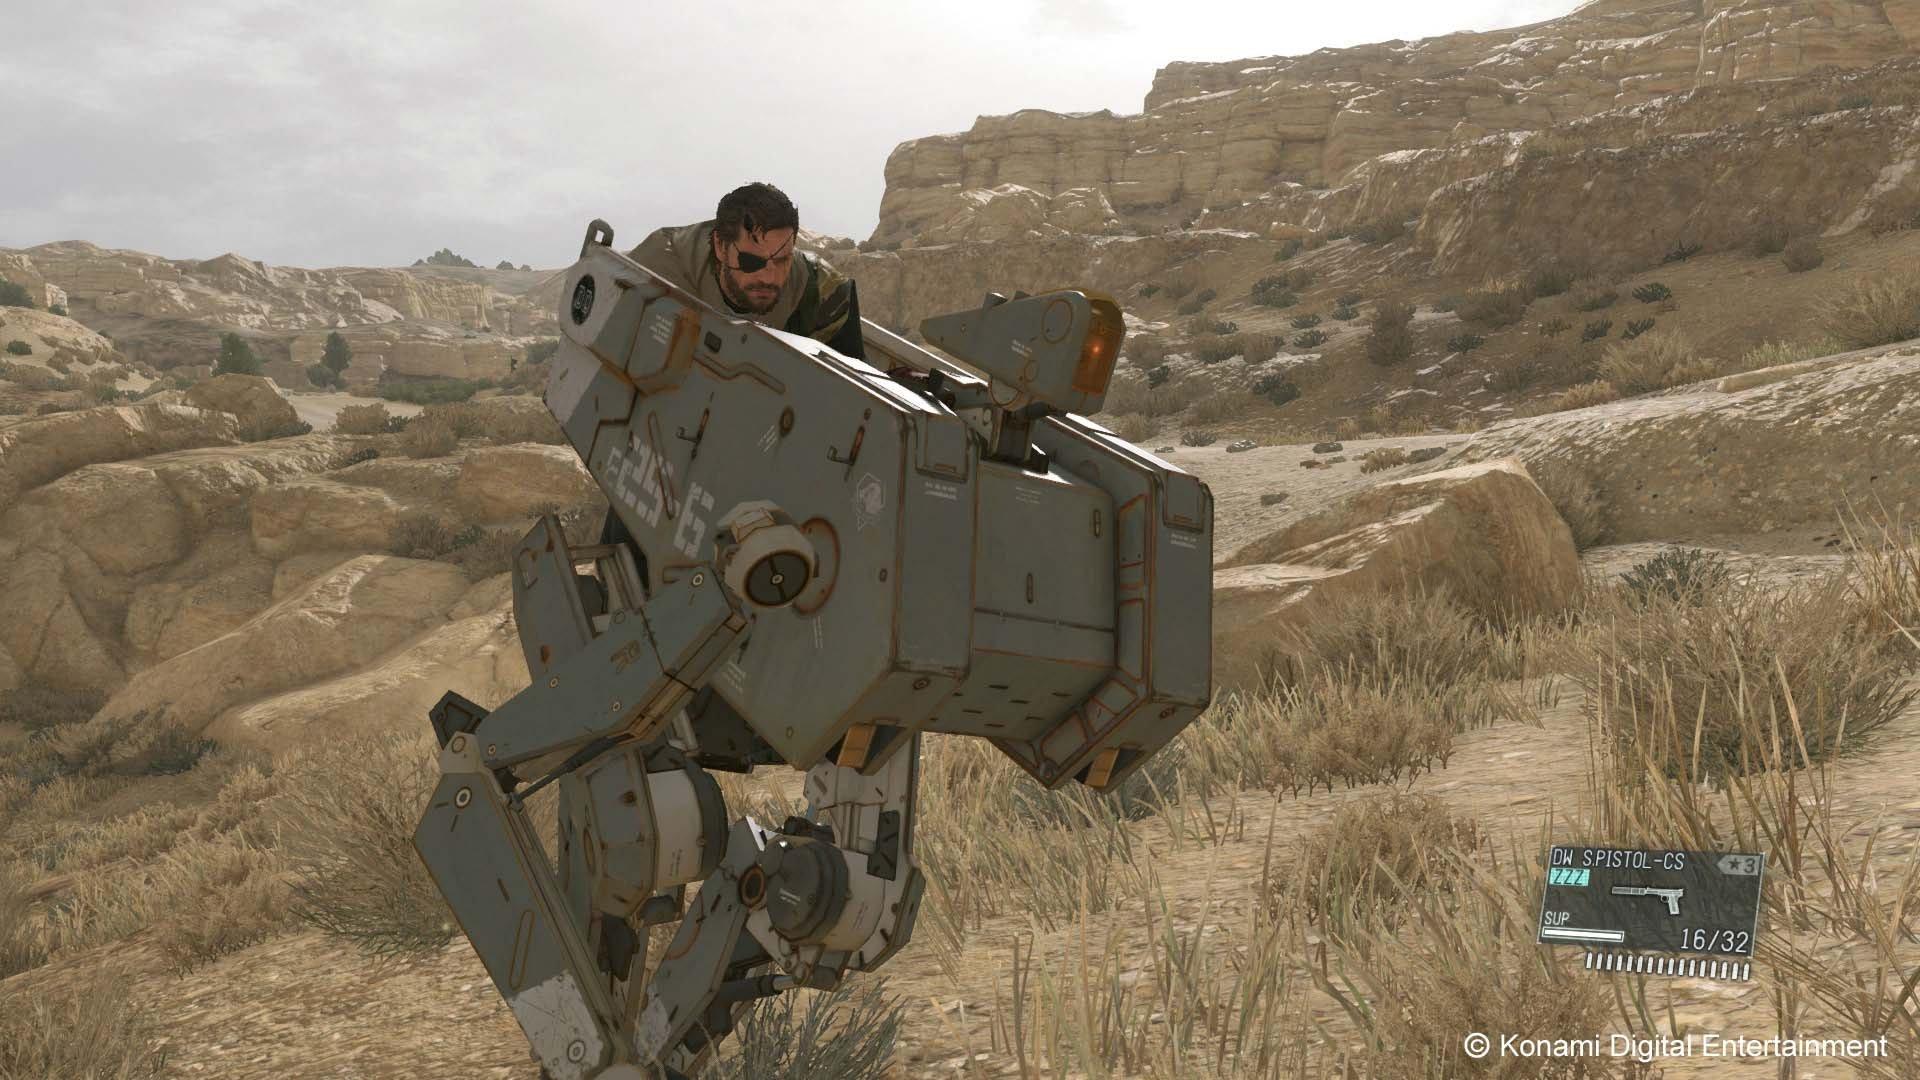 Metal Gear Solid V: The Phantom Pain - PlayStation 4